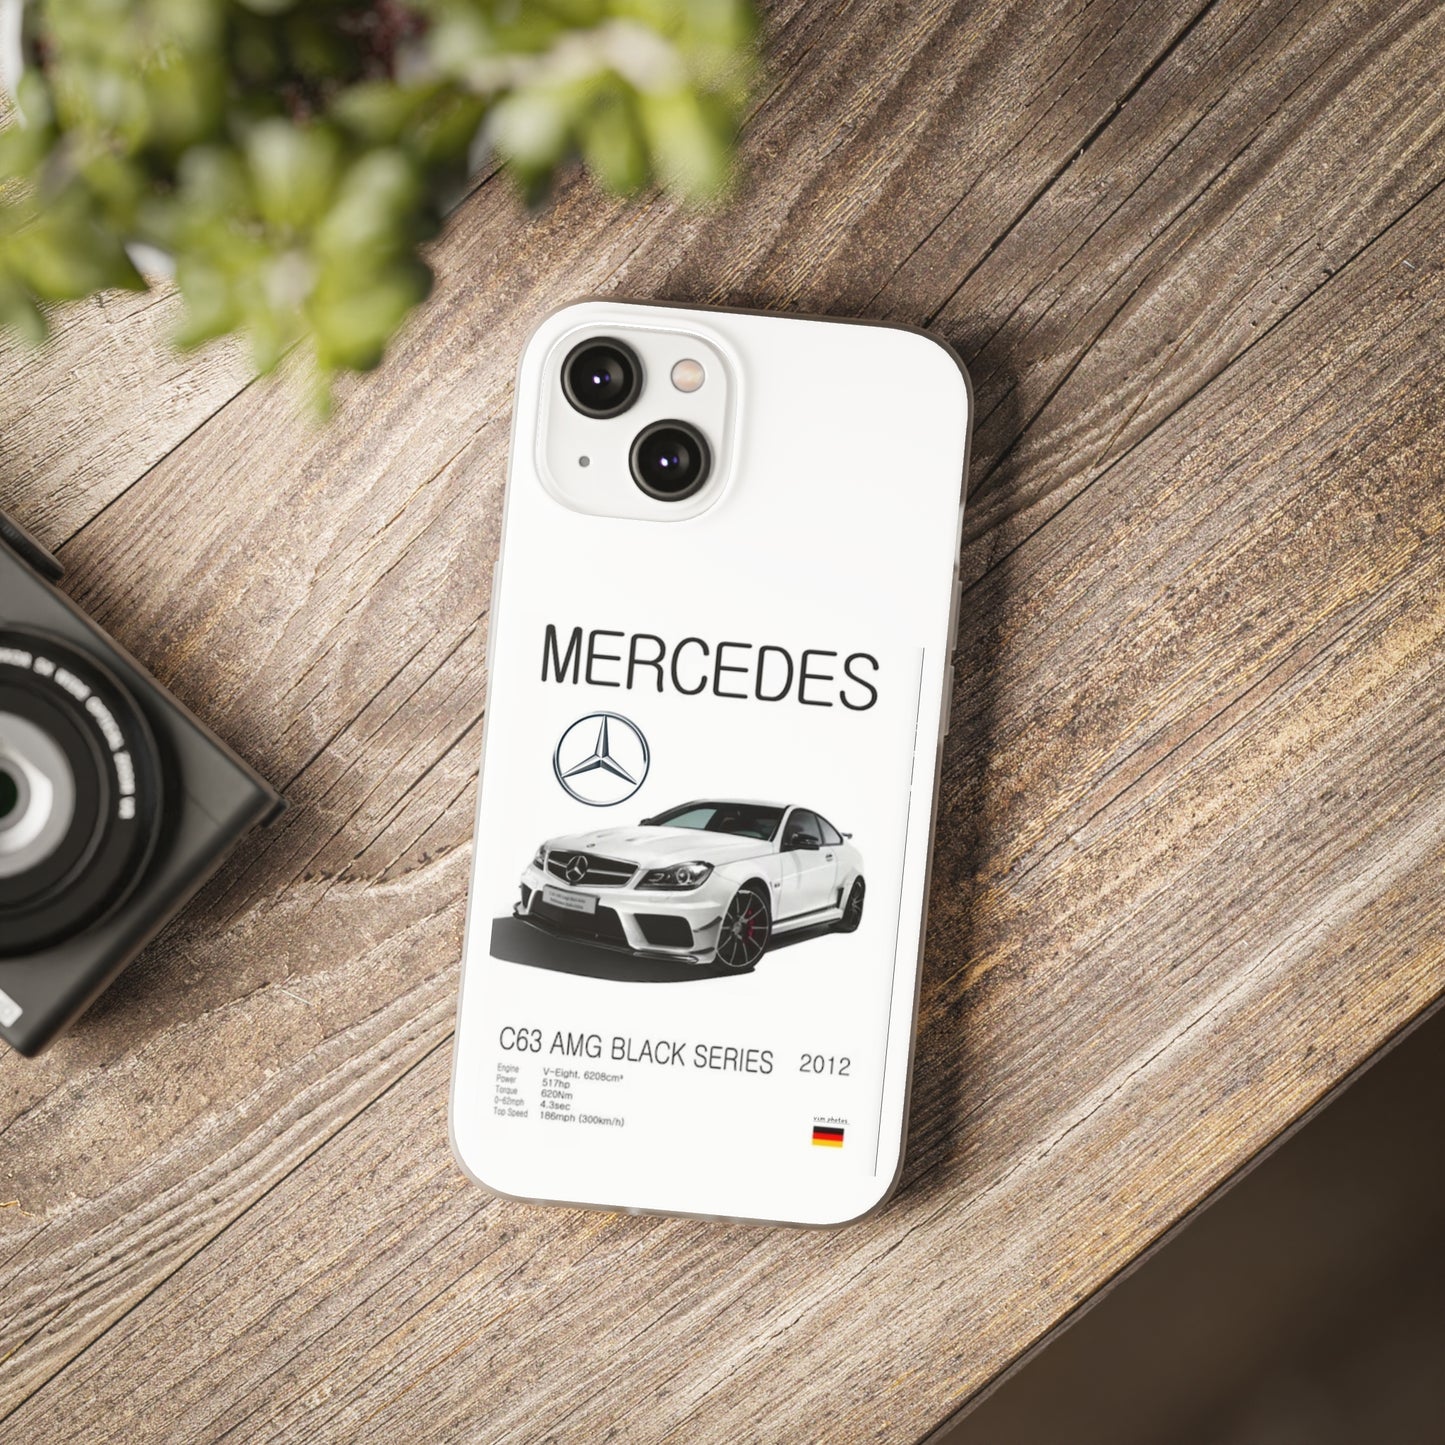 Mercedes C63 AMG Phone Case